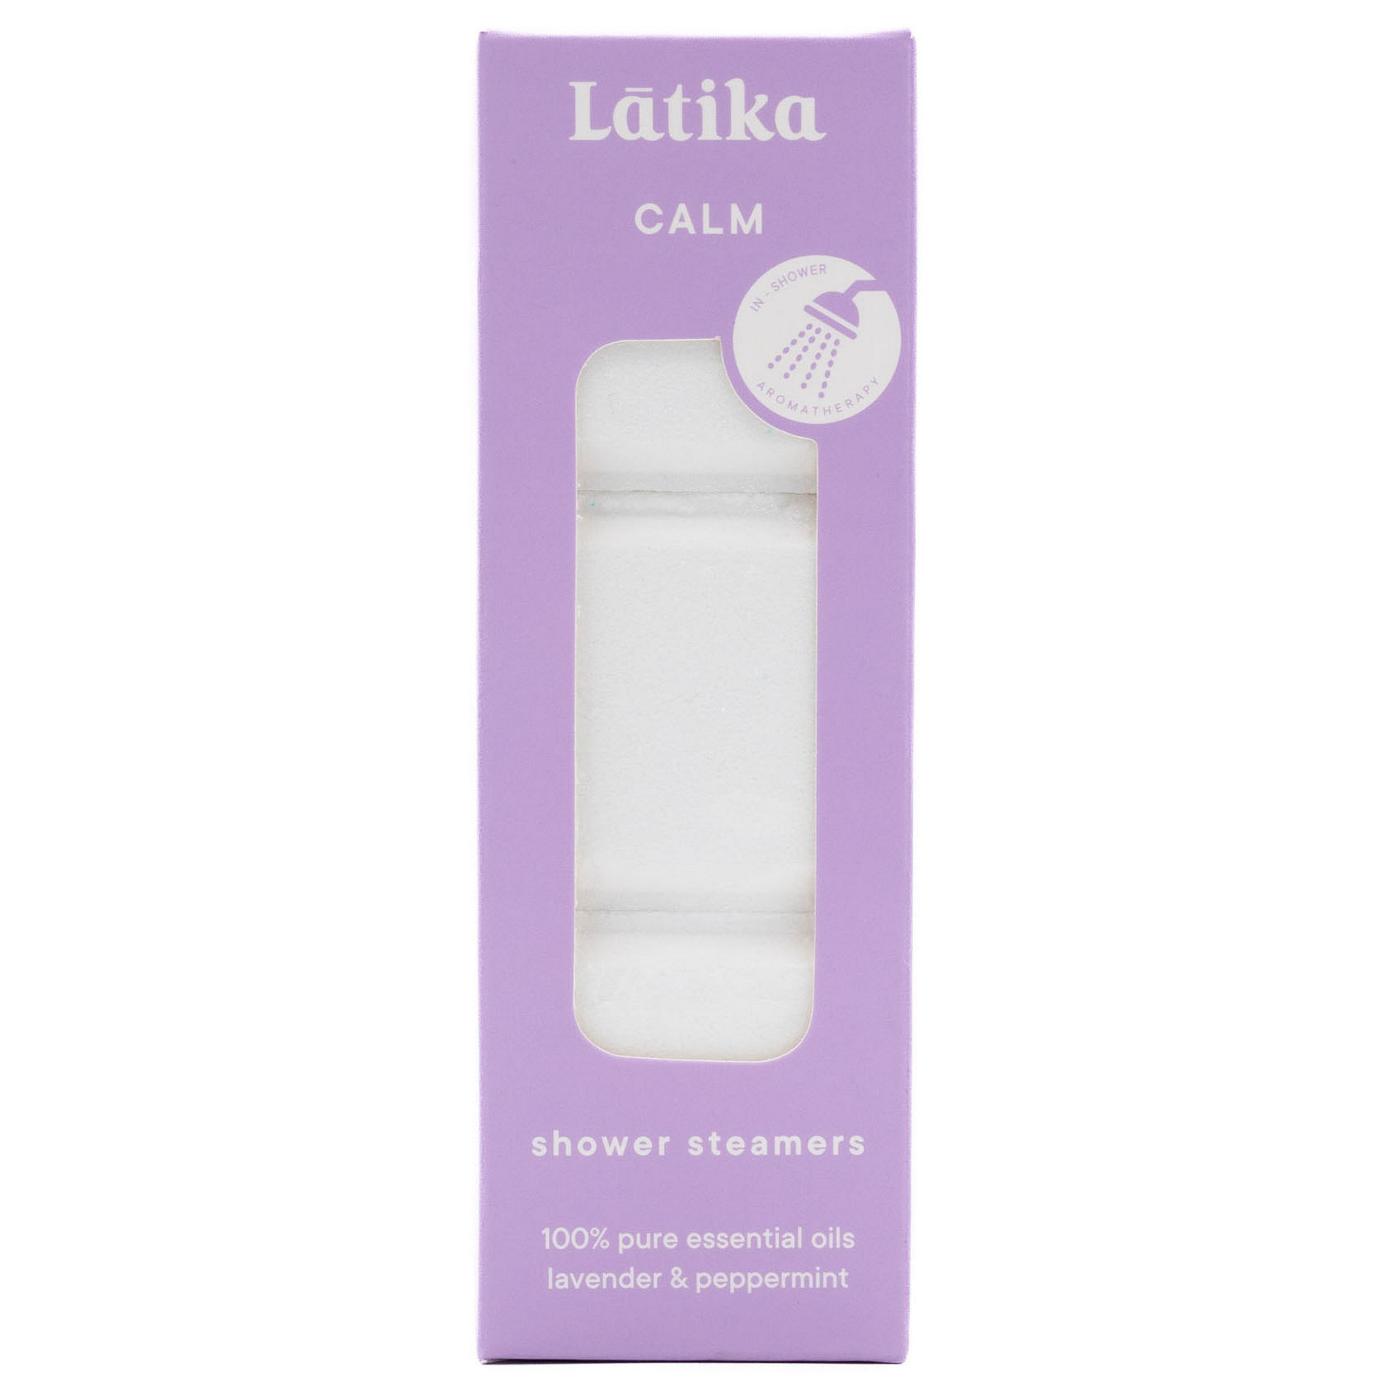 Latika Body Essentials Shower Steamer Calm Lavender & Mint Oils; image 1 of 3